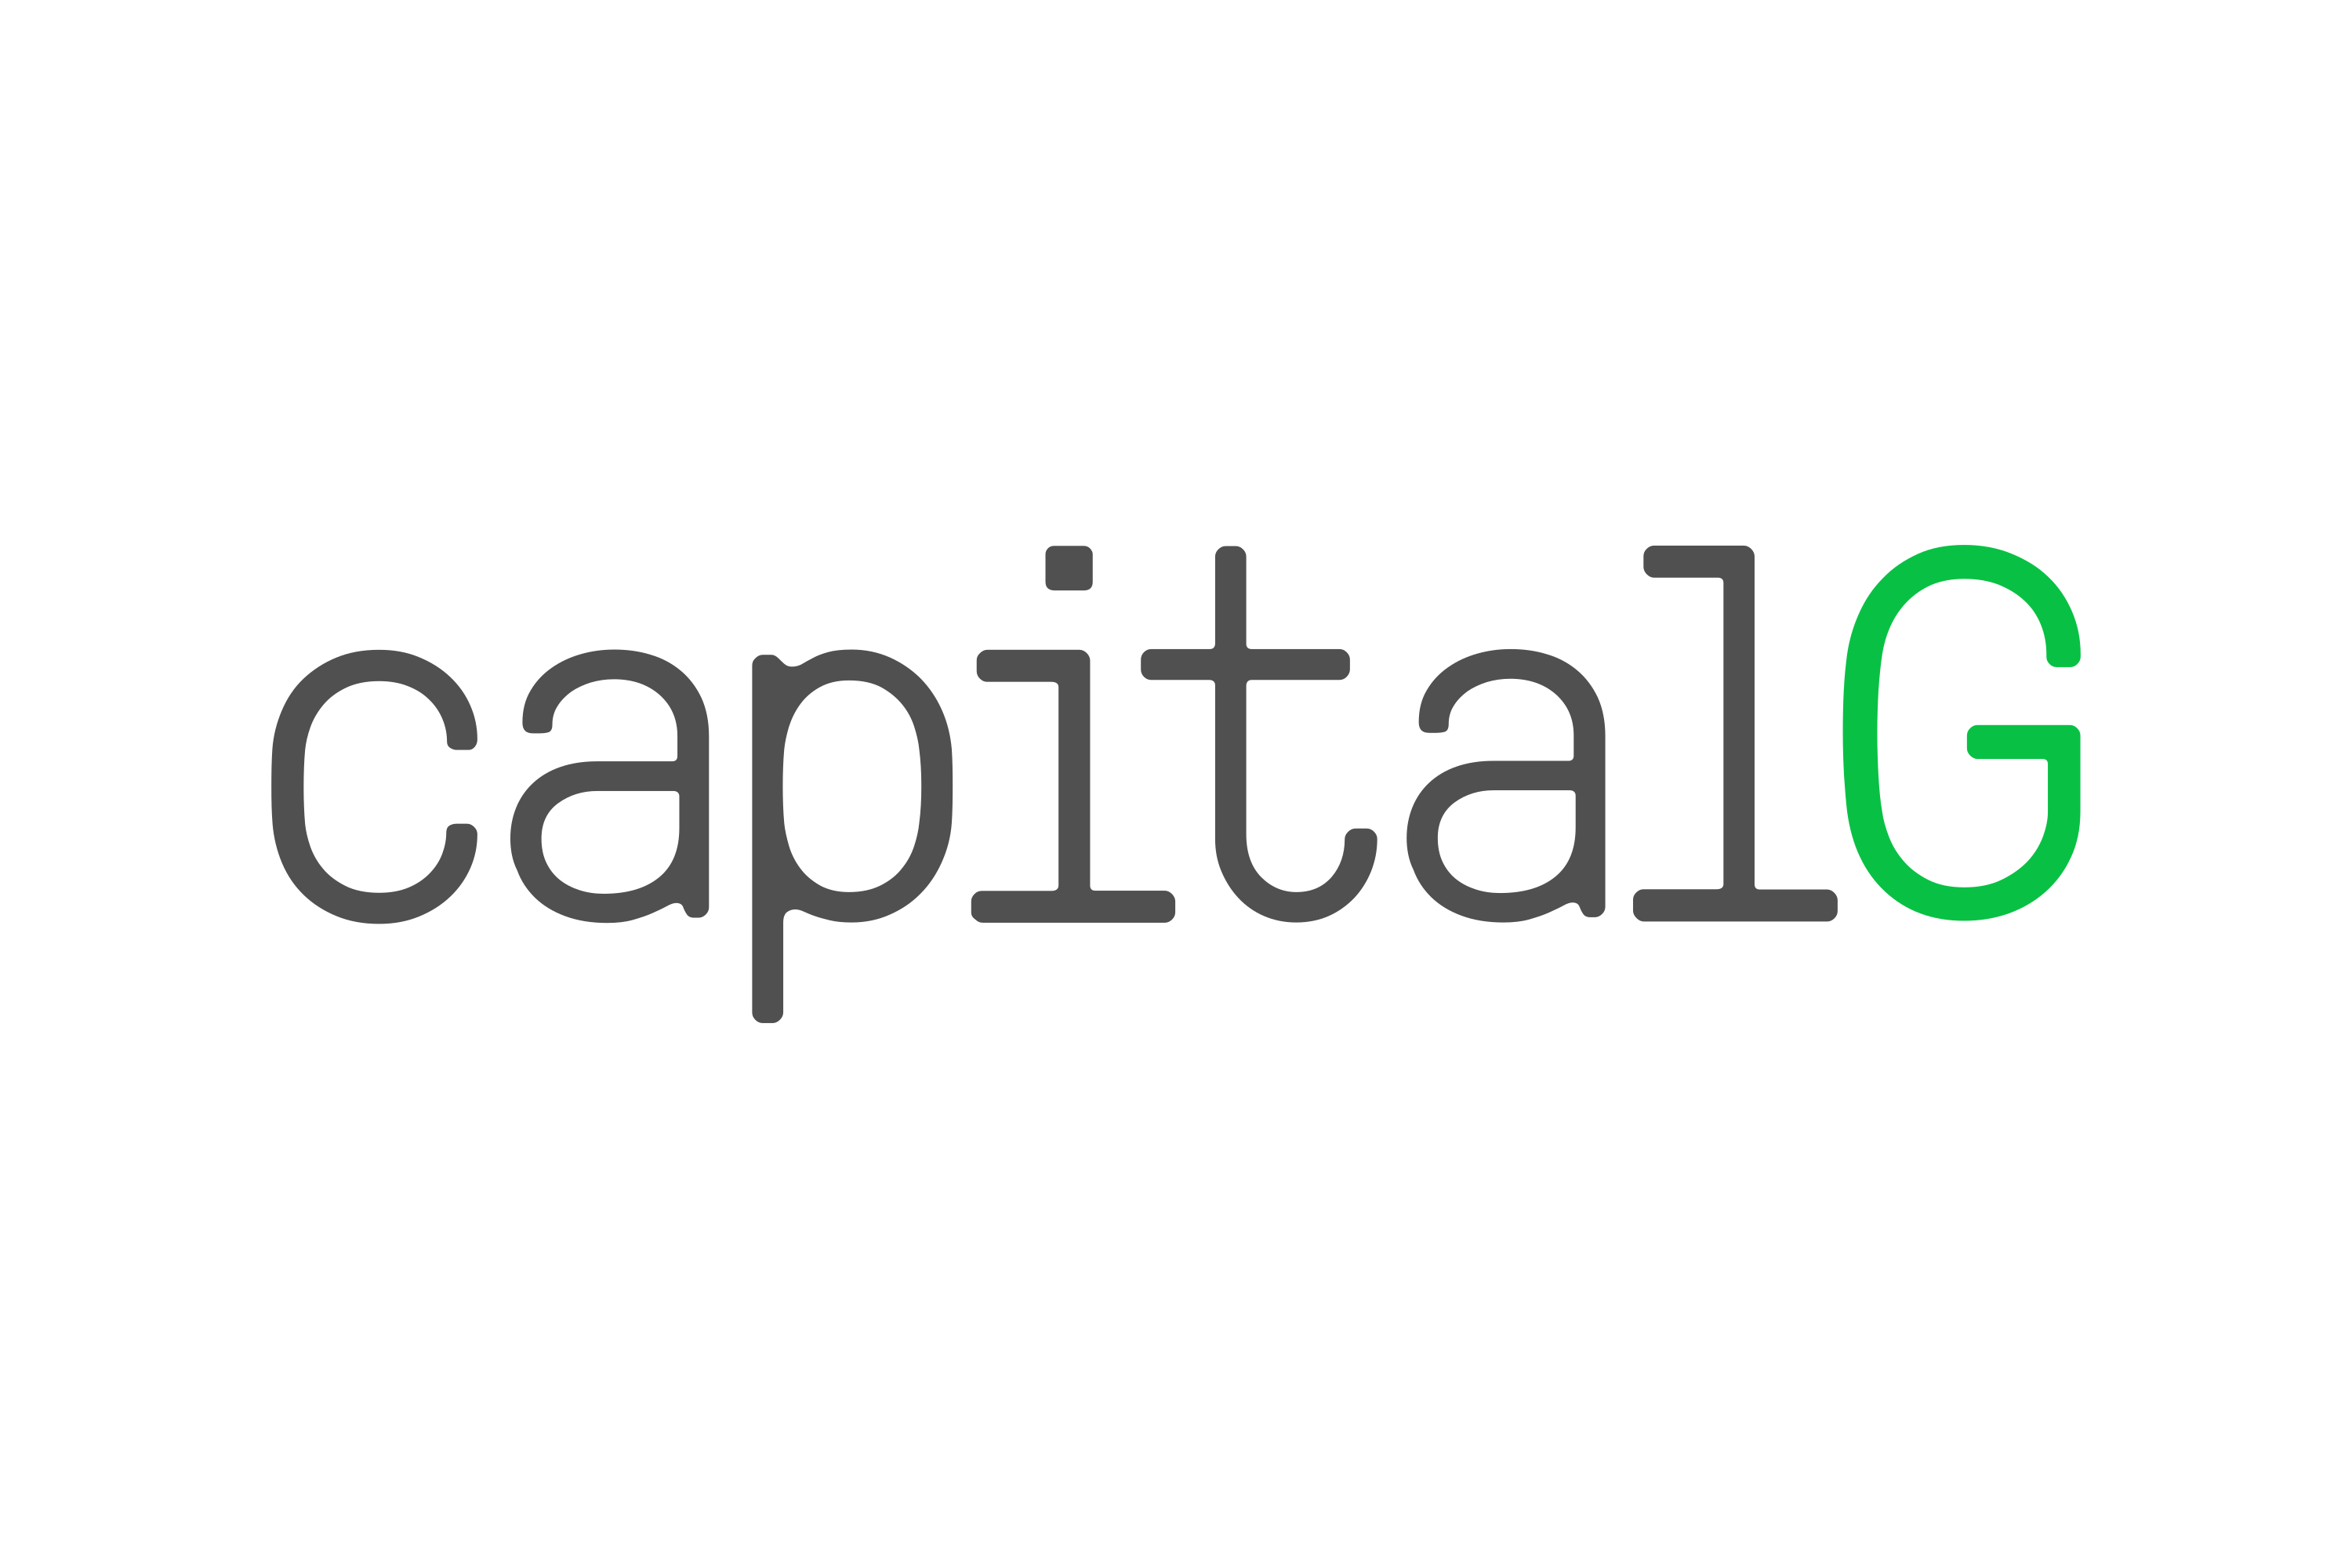 CapitalG Logo